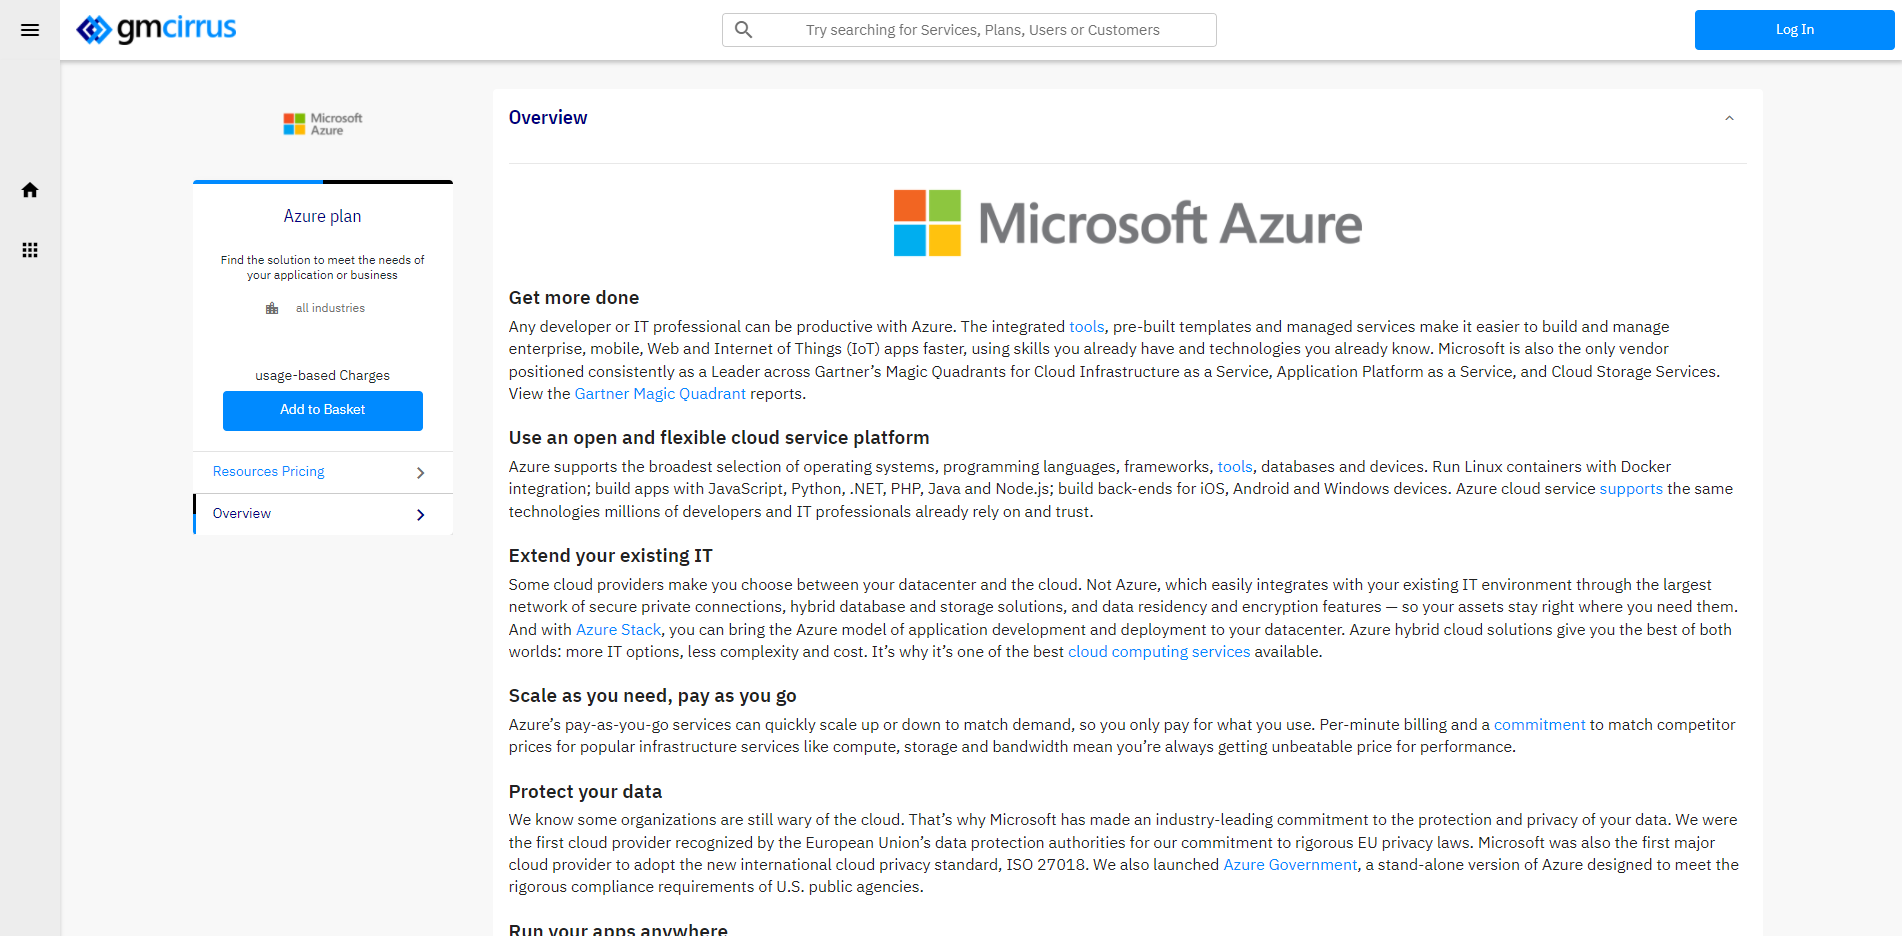 Buy Microsoft Azure on GMCirrus